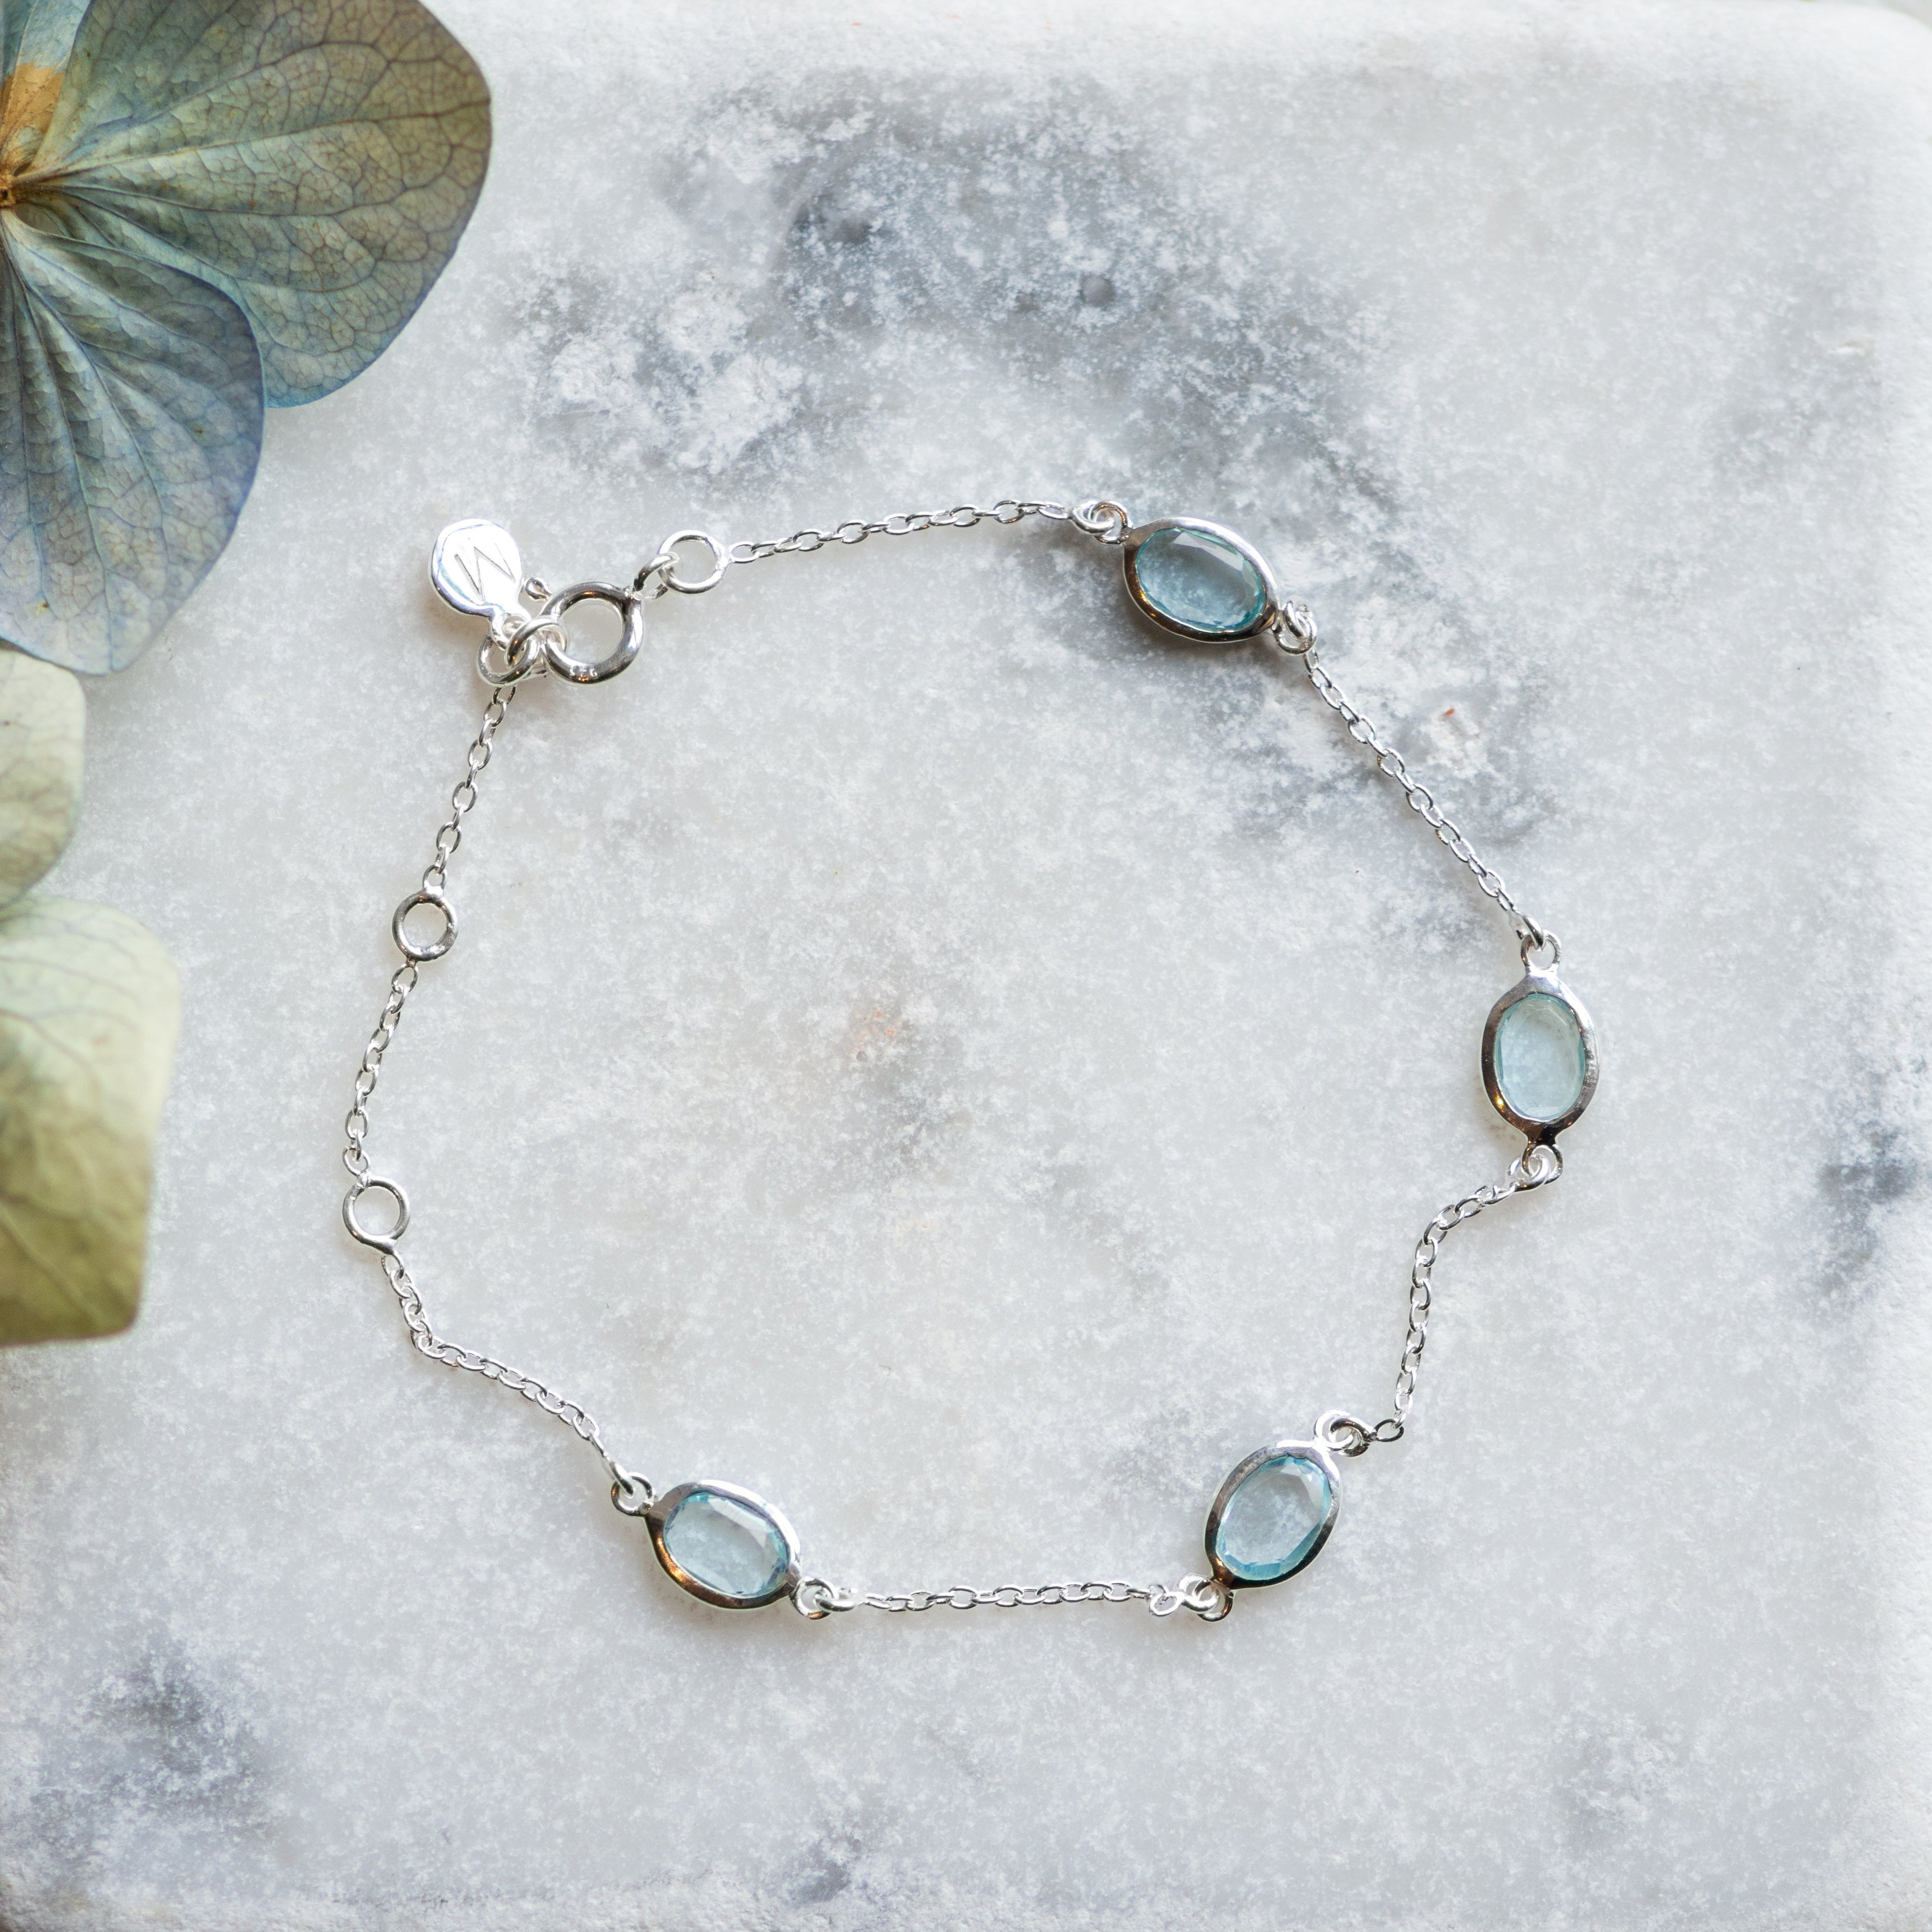 marilyn silver bracelet with sky blue topaz from memara